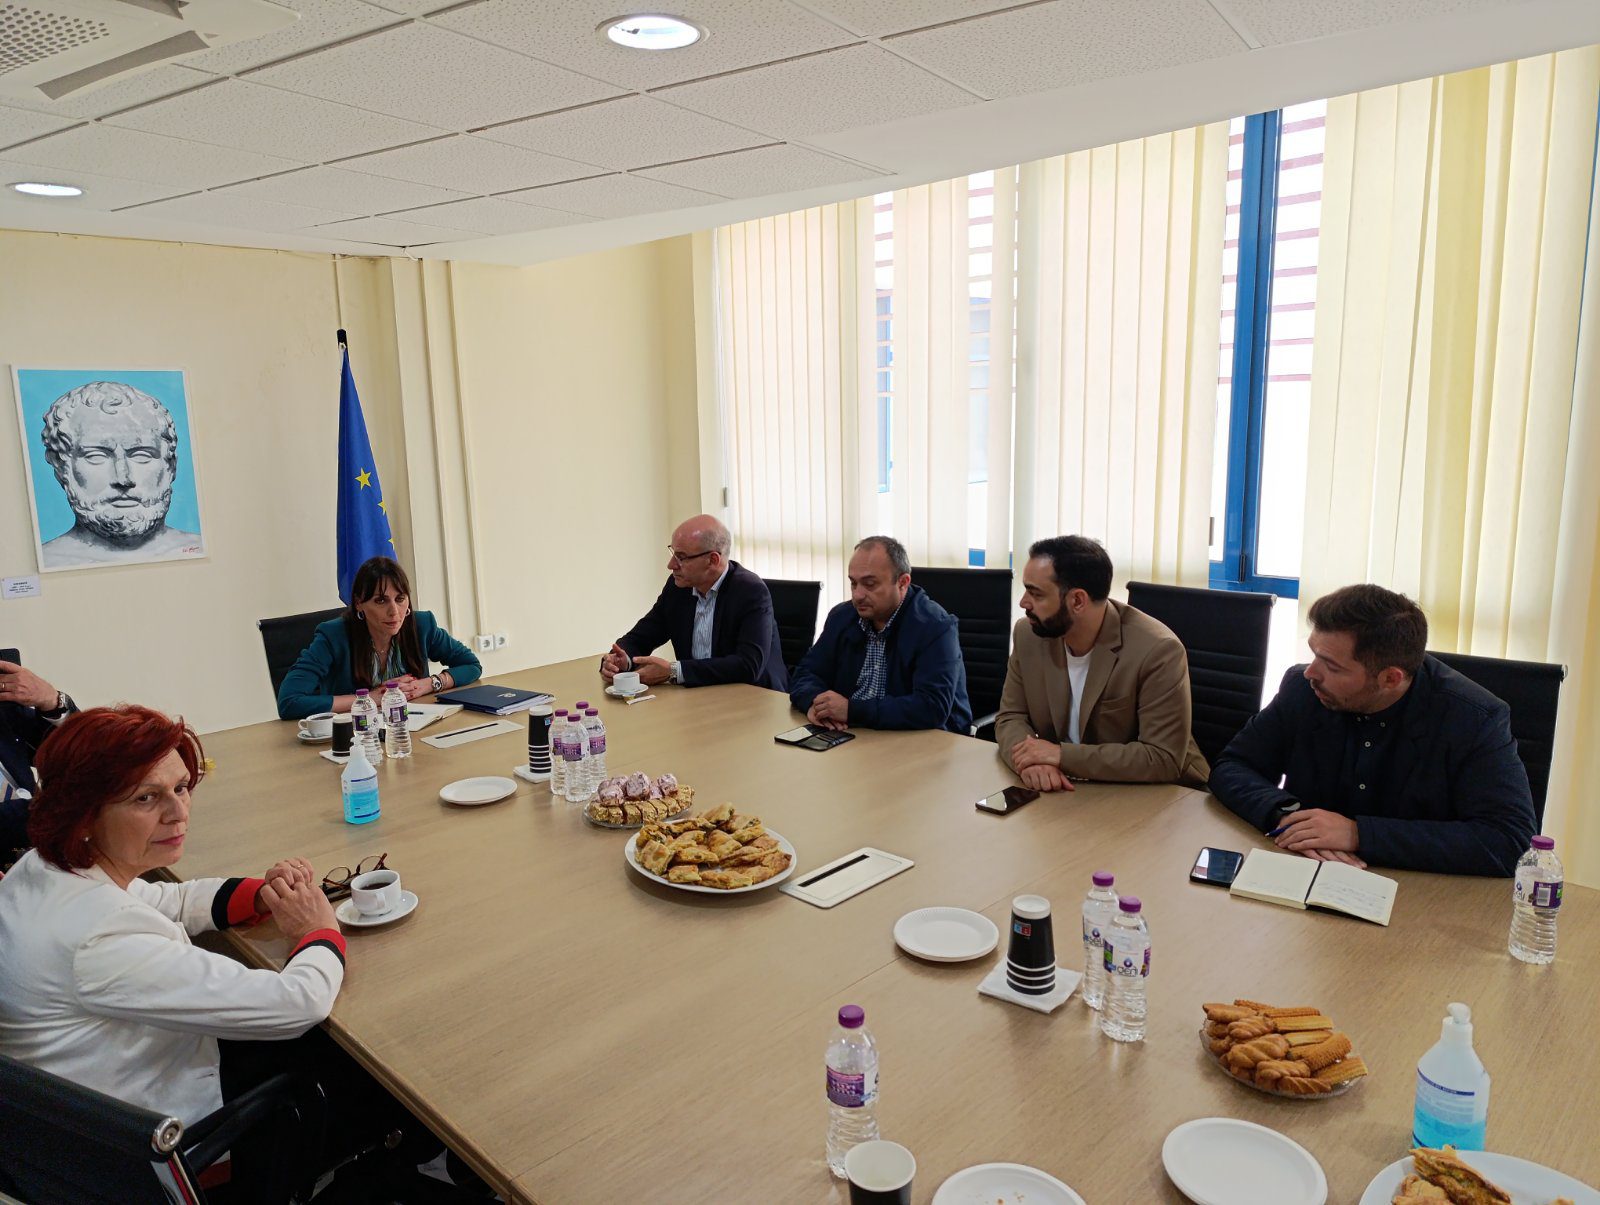 Eordaialive.com - Τα Νέα της Πτολεμαΐδας, Εορδαίας, Κοζάνης Επίσκεψη της Υφυπουργού Εσωτερικών Βιβής Χαραλαμπογιάννη στην Περιφέρεια Δυτικής Μακεδονίας - Πρόταση σύναψης Μνημονίου Συνεργασίας μεταξύ της Περιφέρειας και της Γ. Γ.  Δημόσιας Διοίκησης του ΥΠΕΣ